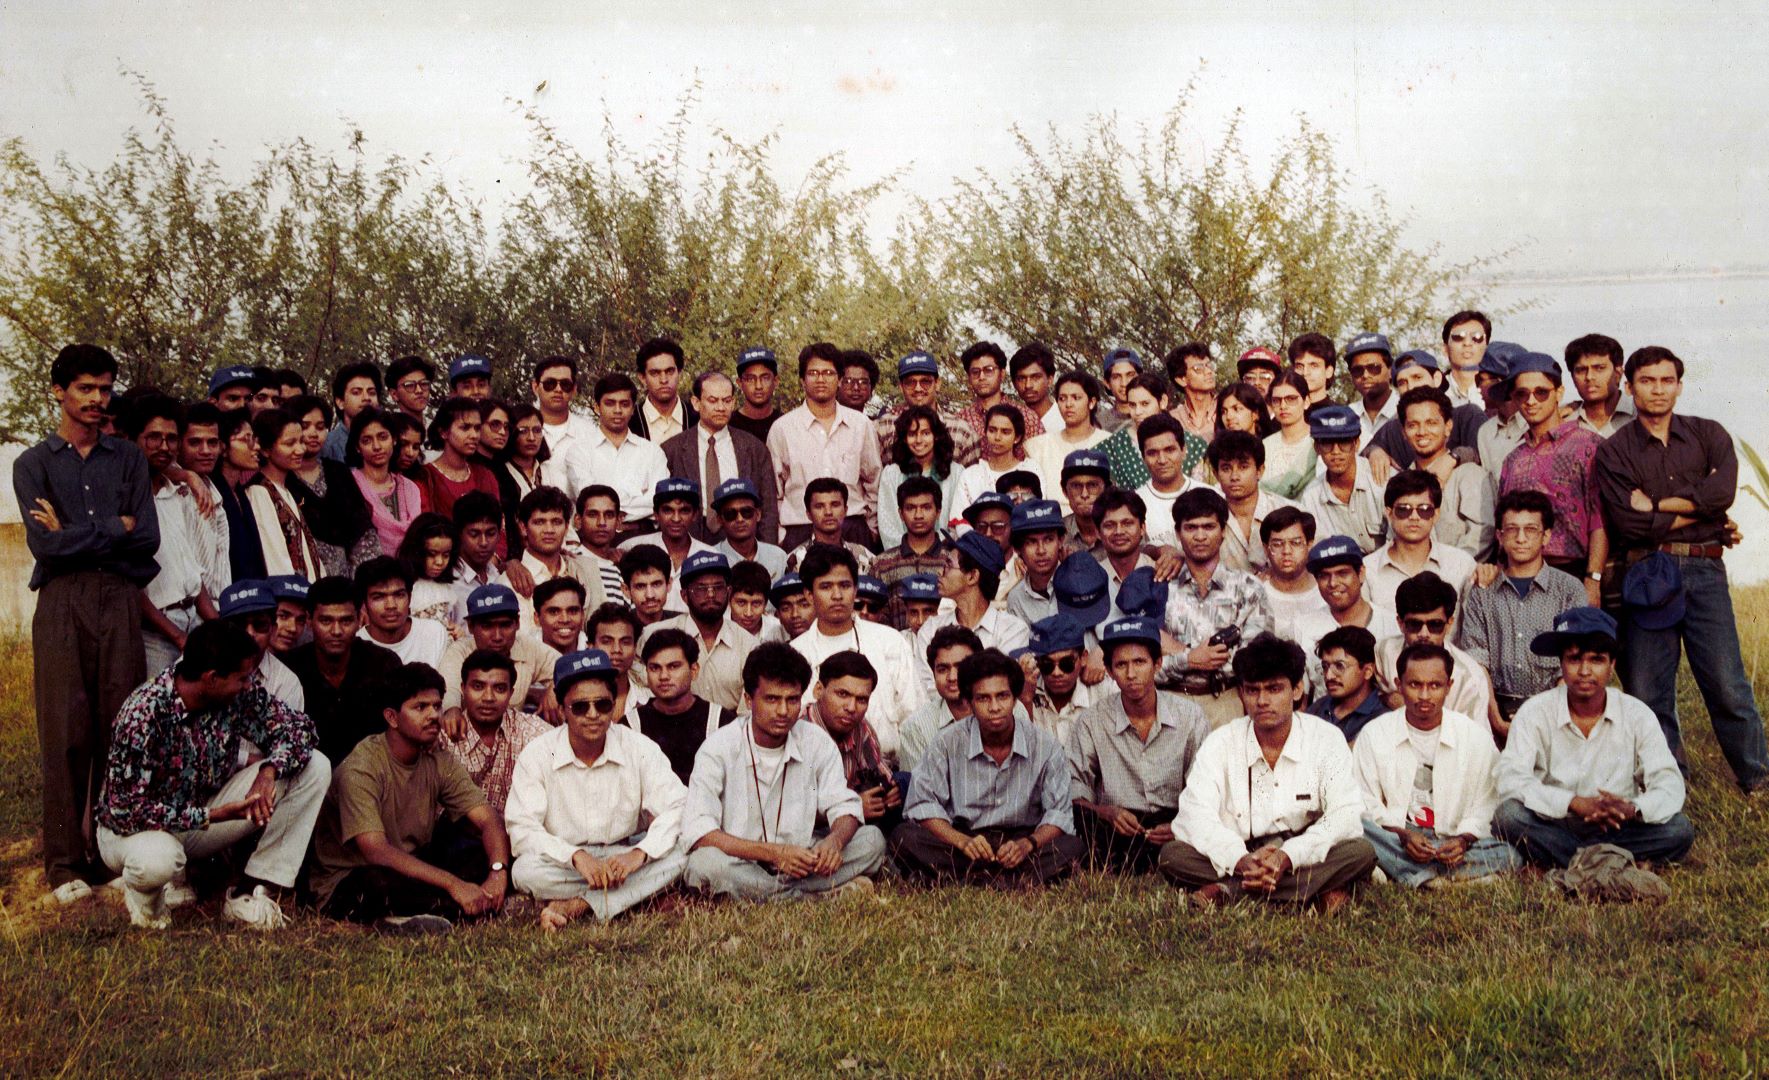 Faculty Members of Dept of EEE, BUET in 1994